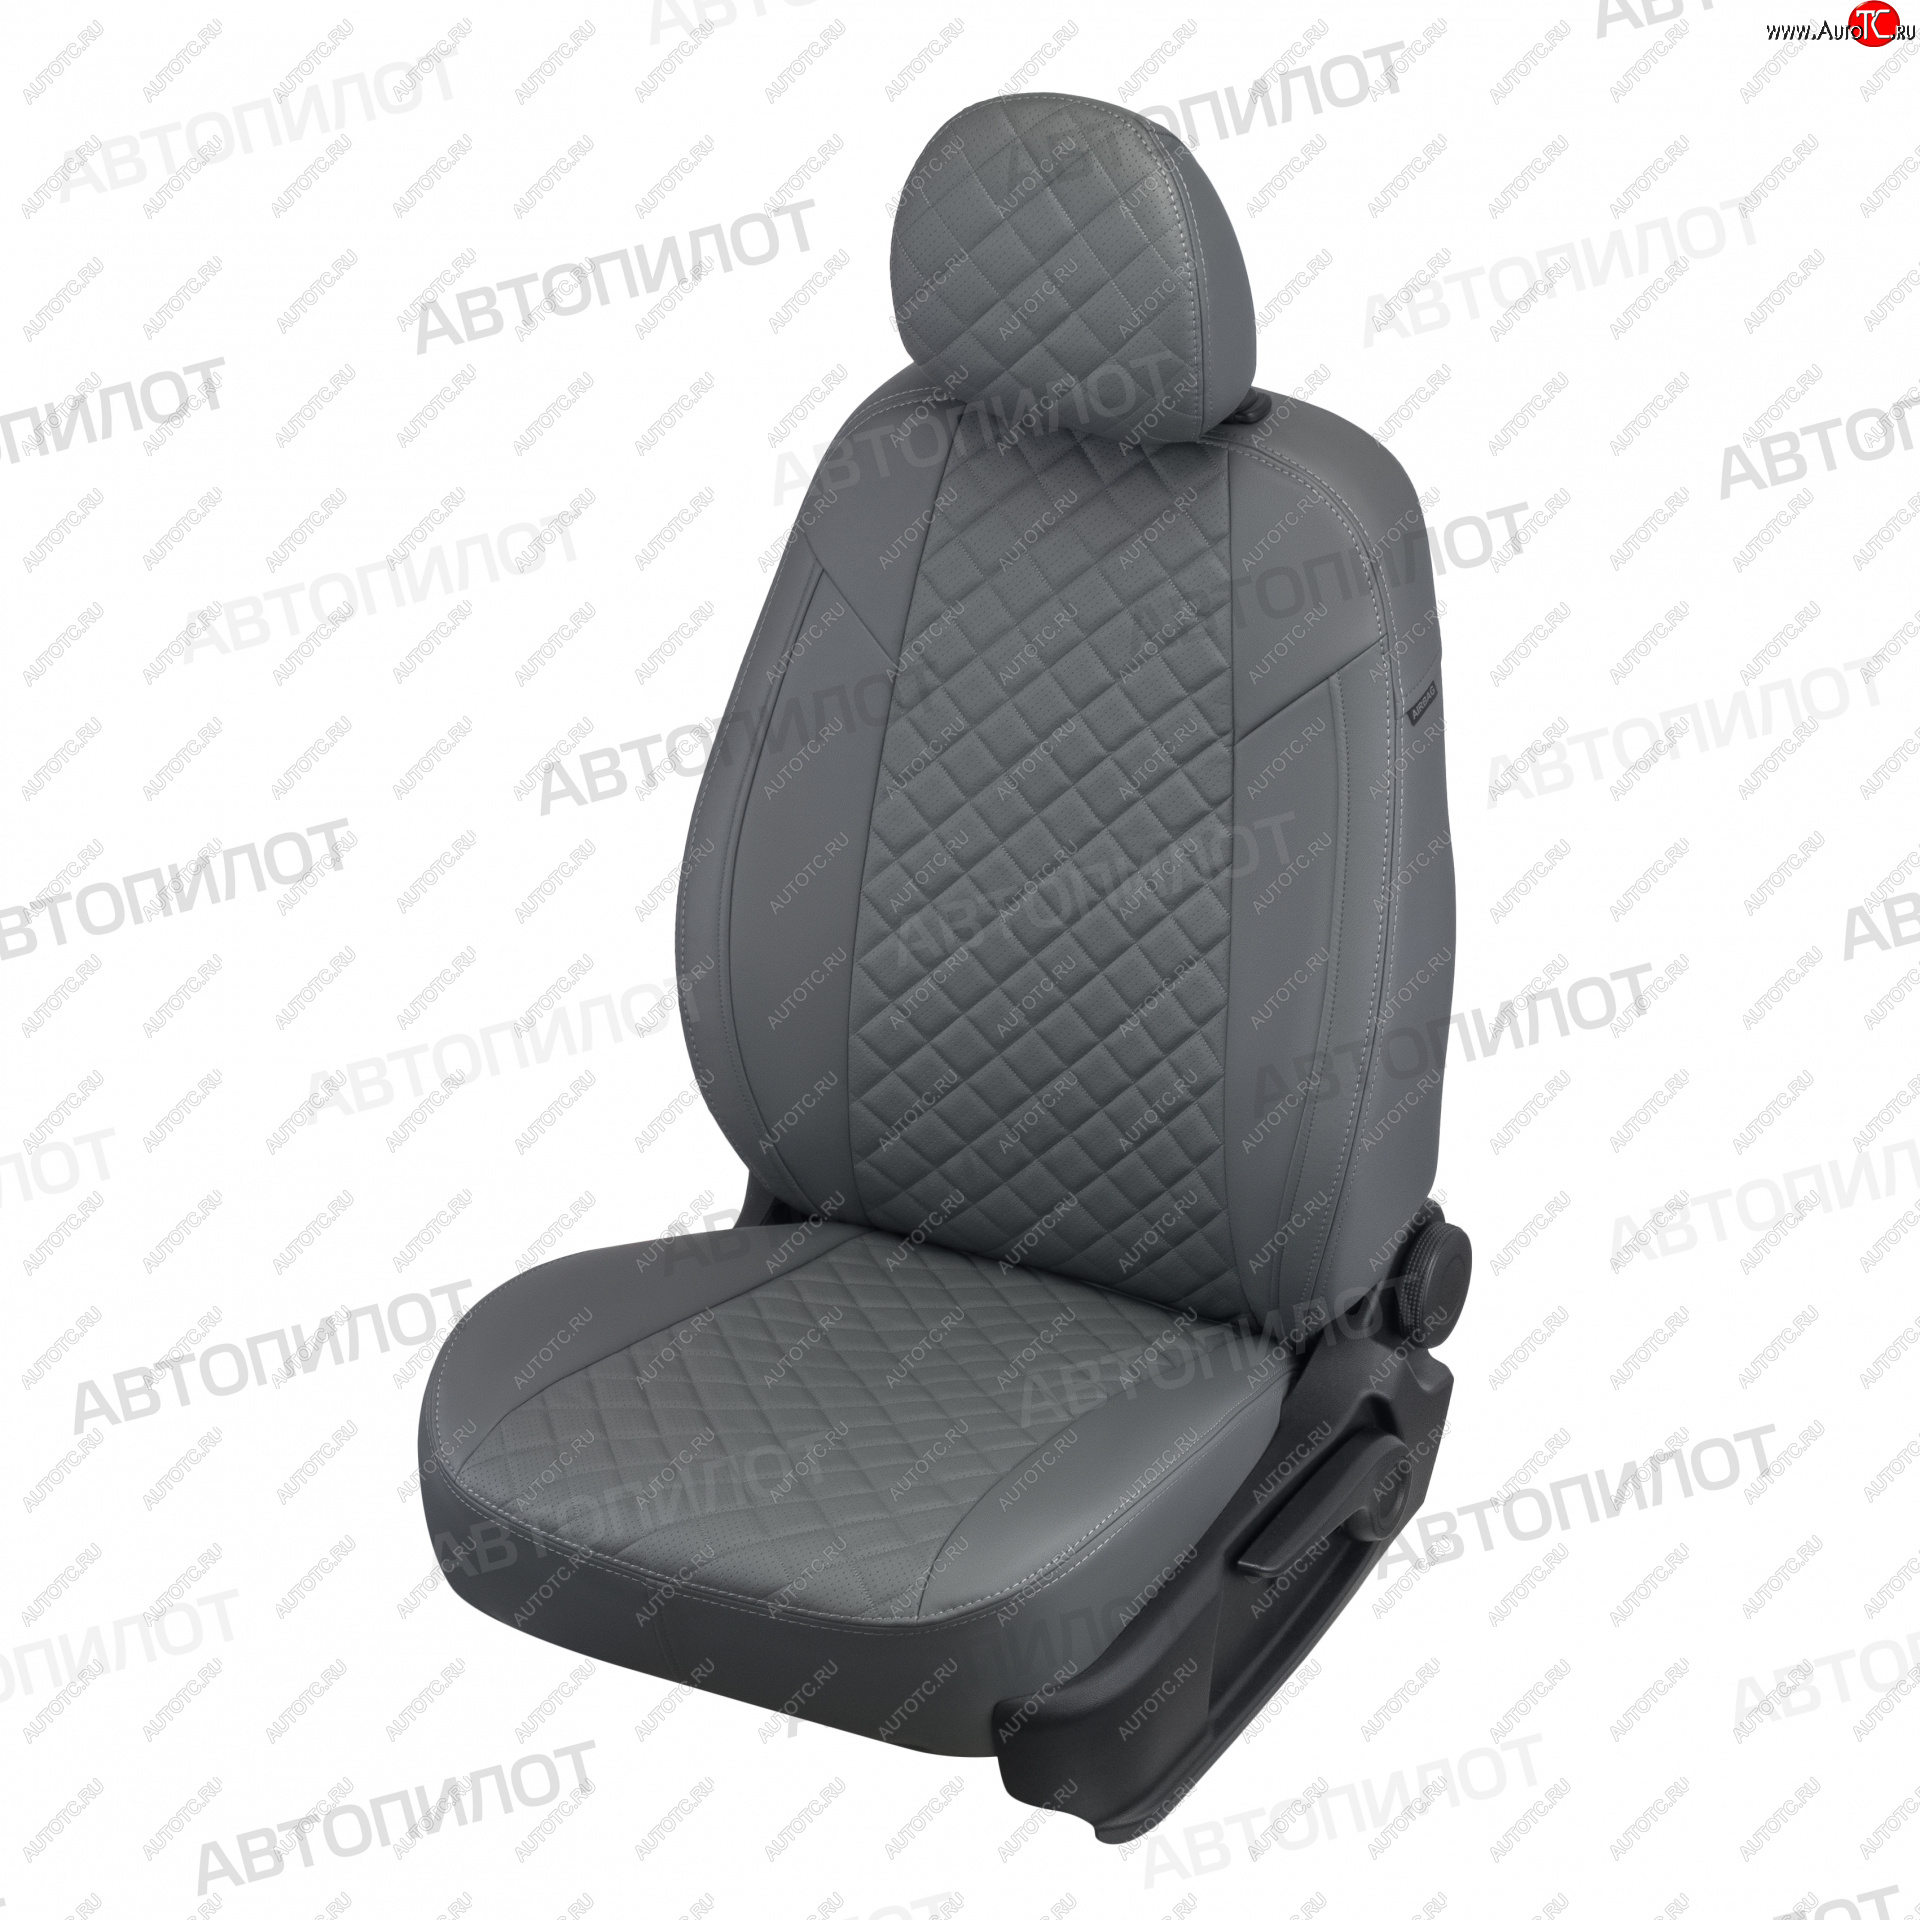 13 999 р. Чехлы сидений (5 мест, экокожа) Автопилот Ромб  Ford Galaxy  WGR (1995-2006) (серый)